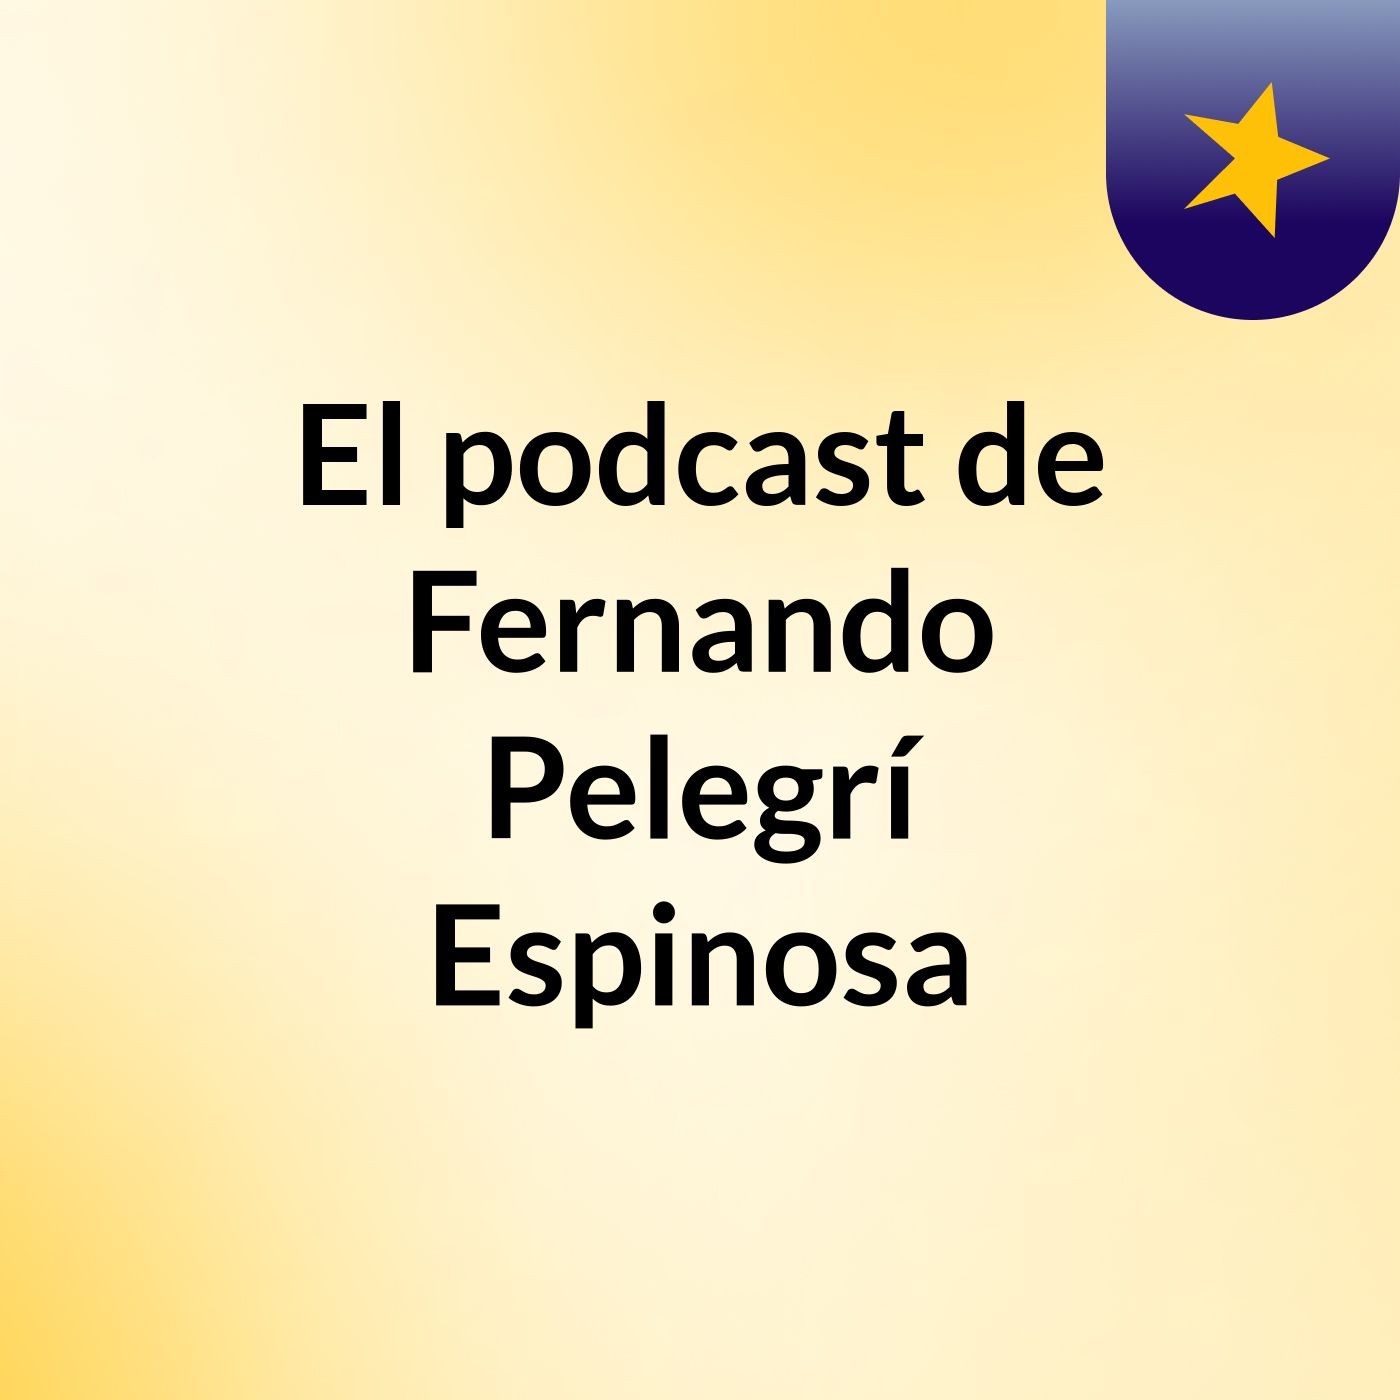 El podcast de Fernando Pelegrí Espinosa 